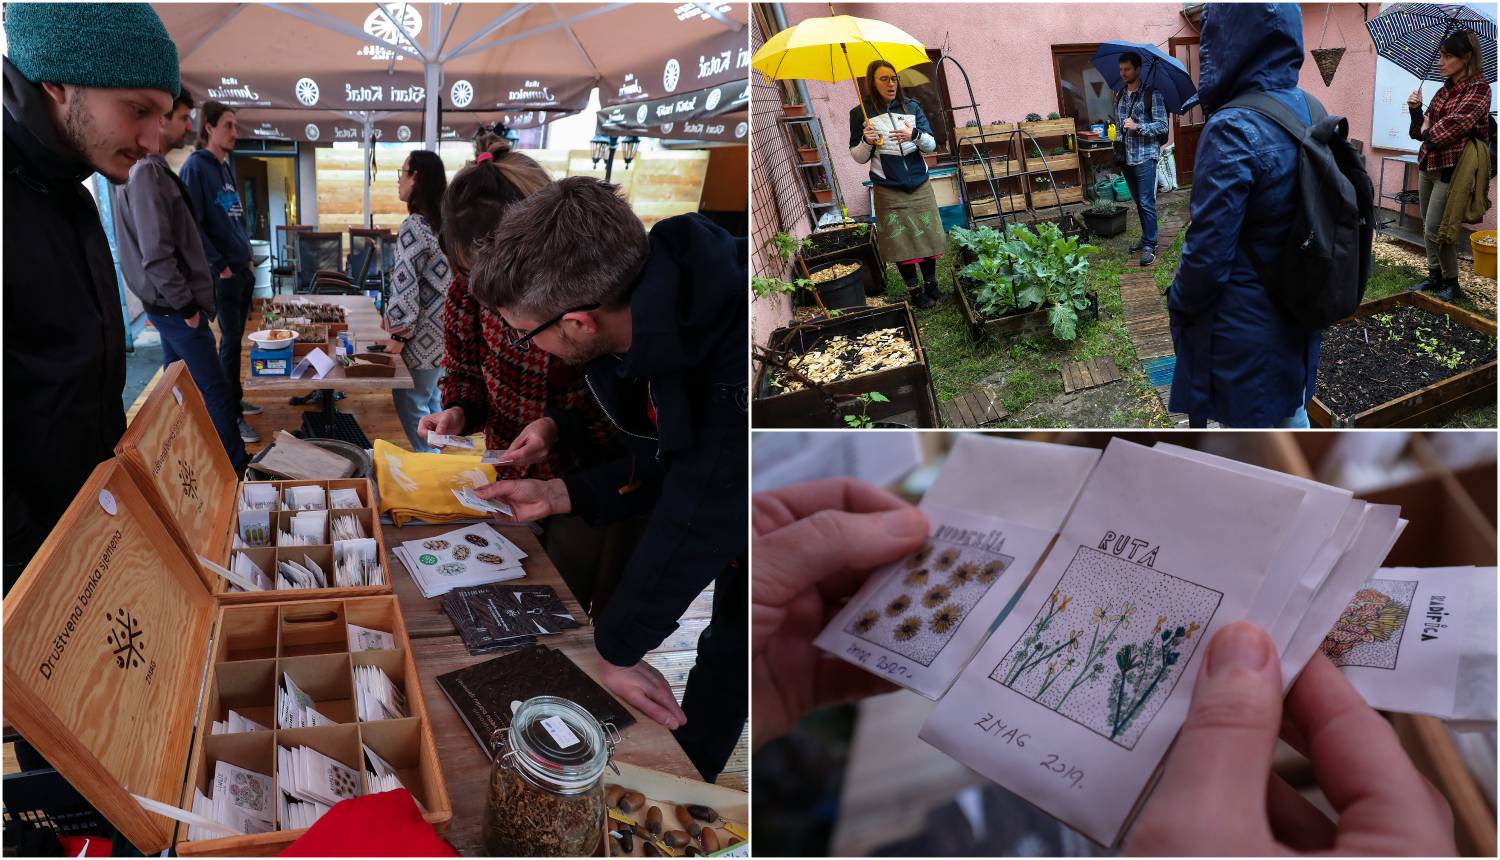 Festival Urbana džungla okupio sjemenare i vrtlare u Zagrebu